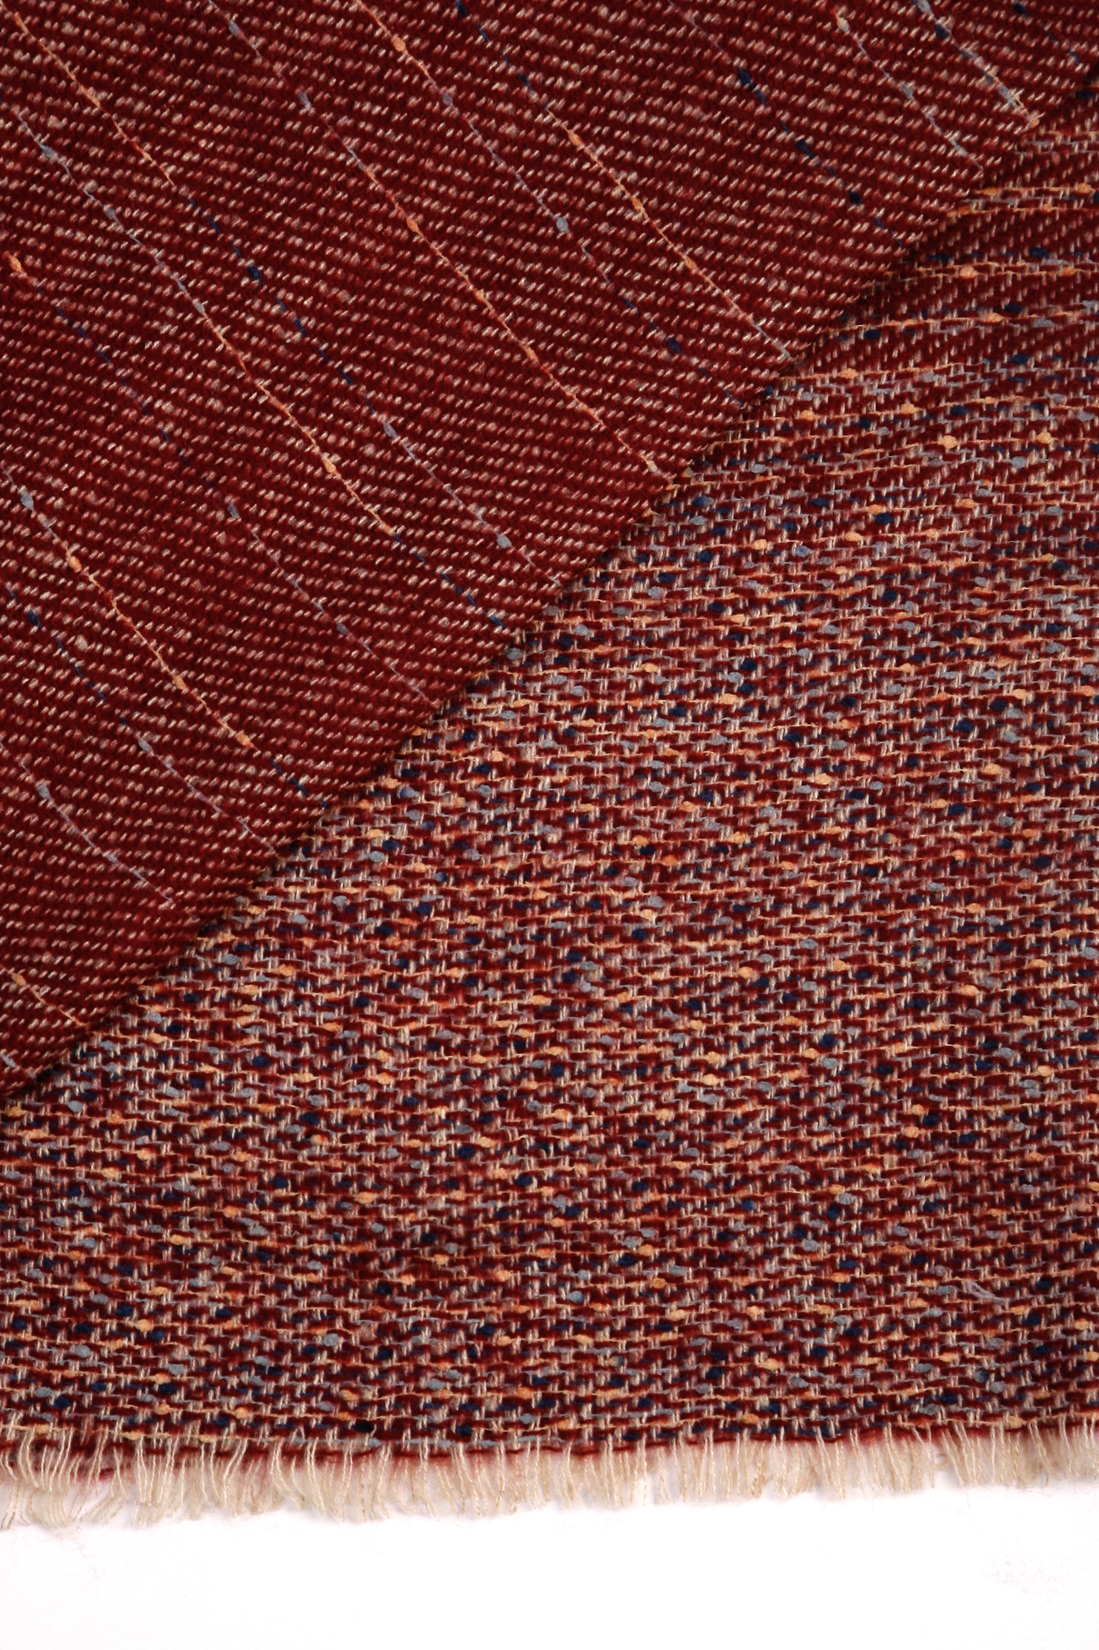 Красный твидовый шарф (арт. baon B358509), размер Без/раз, цвет maroon#804145 Красный твидовый шарф (арт. baon B358509) - фото 2